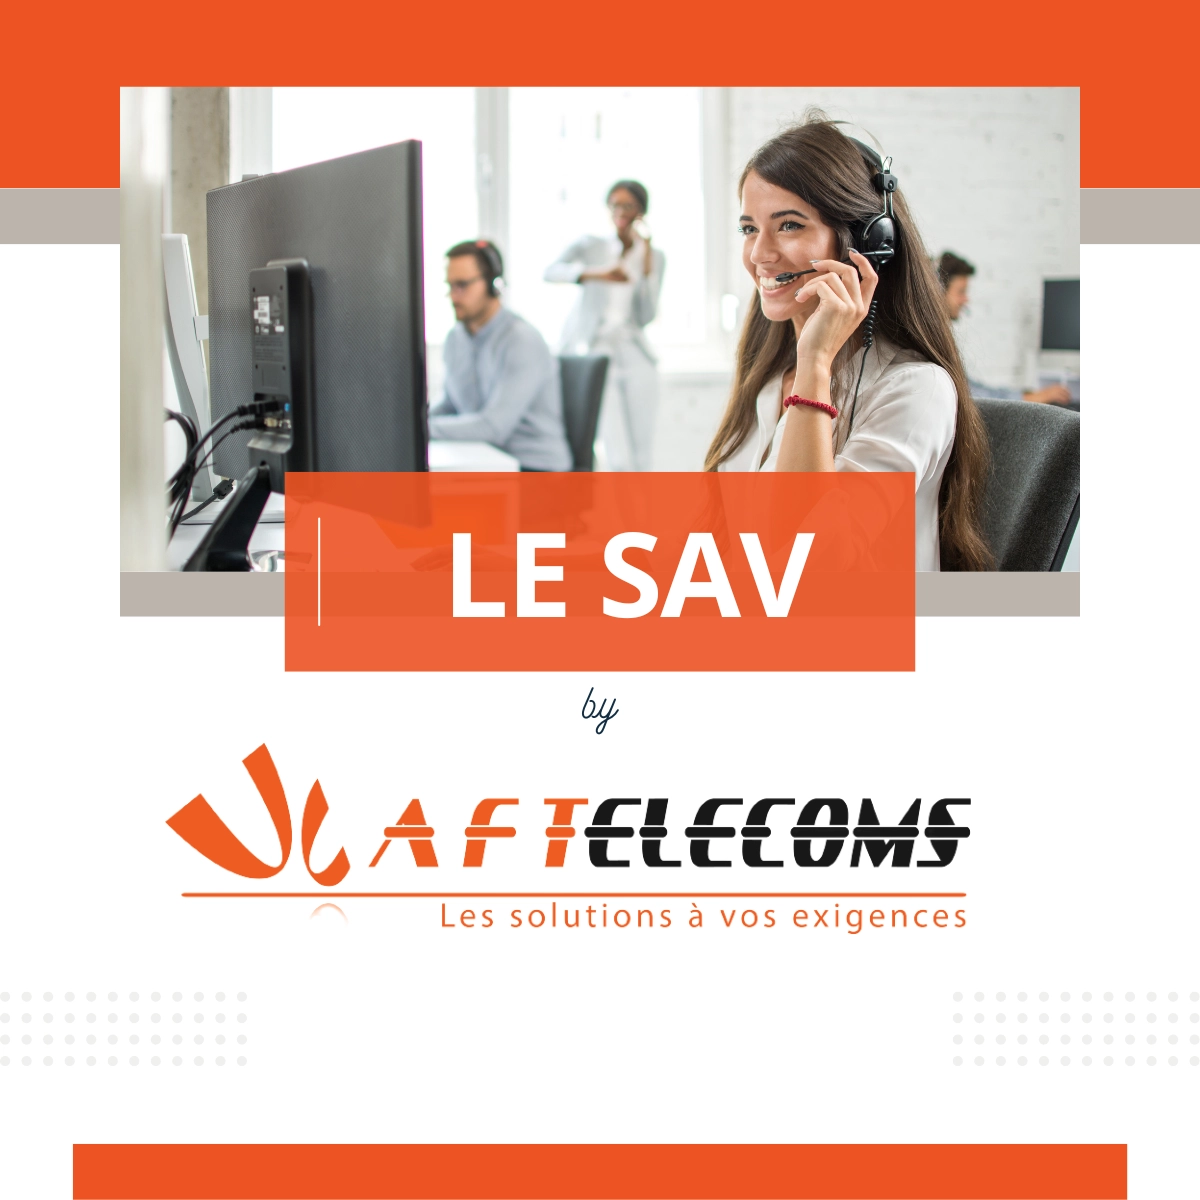 Le SAV by AF TELECOMS